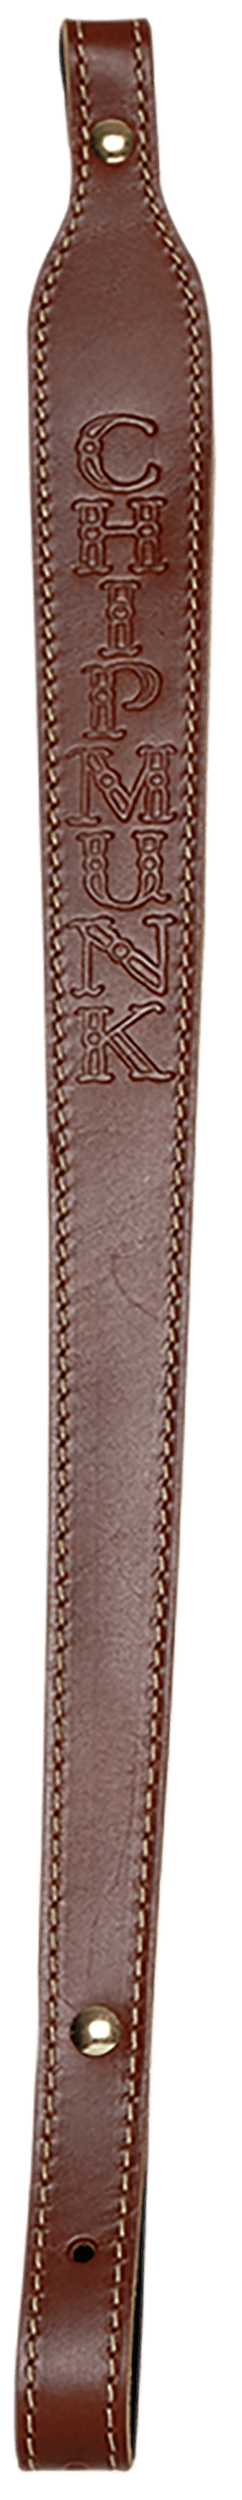 Crickett 80020 Chipmunk Leather Sling Black Leather Adjustable